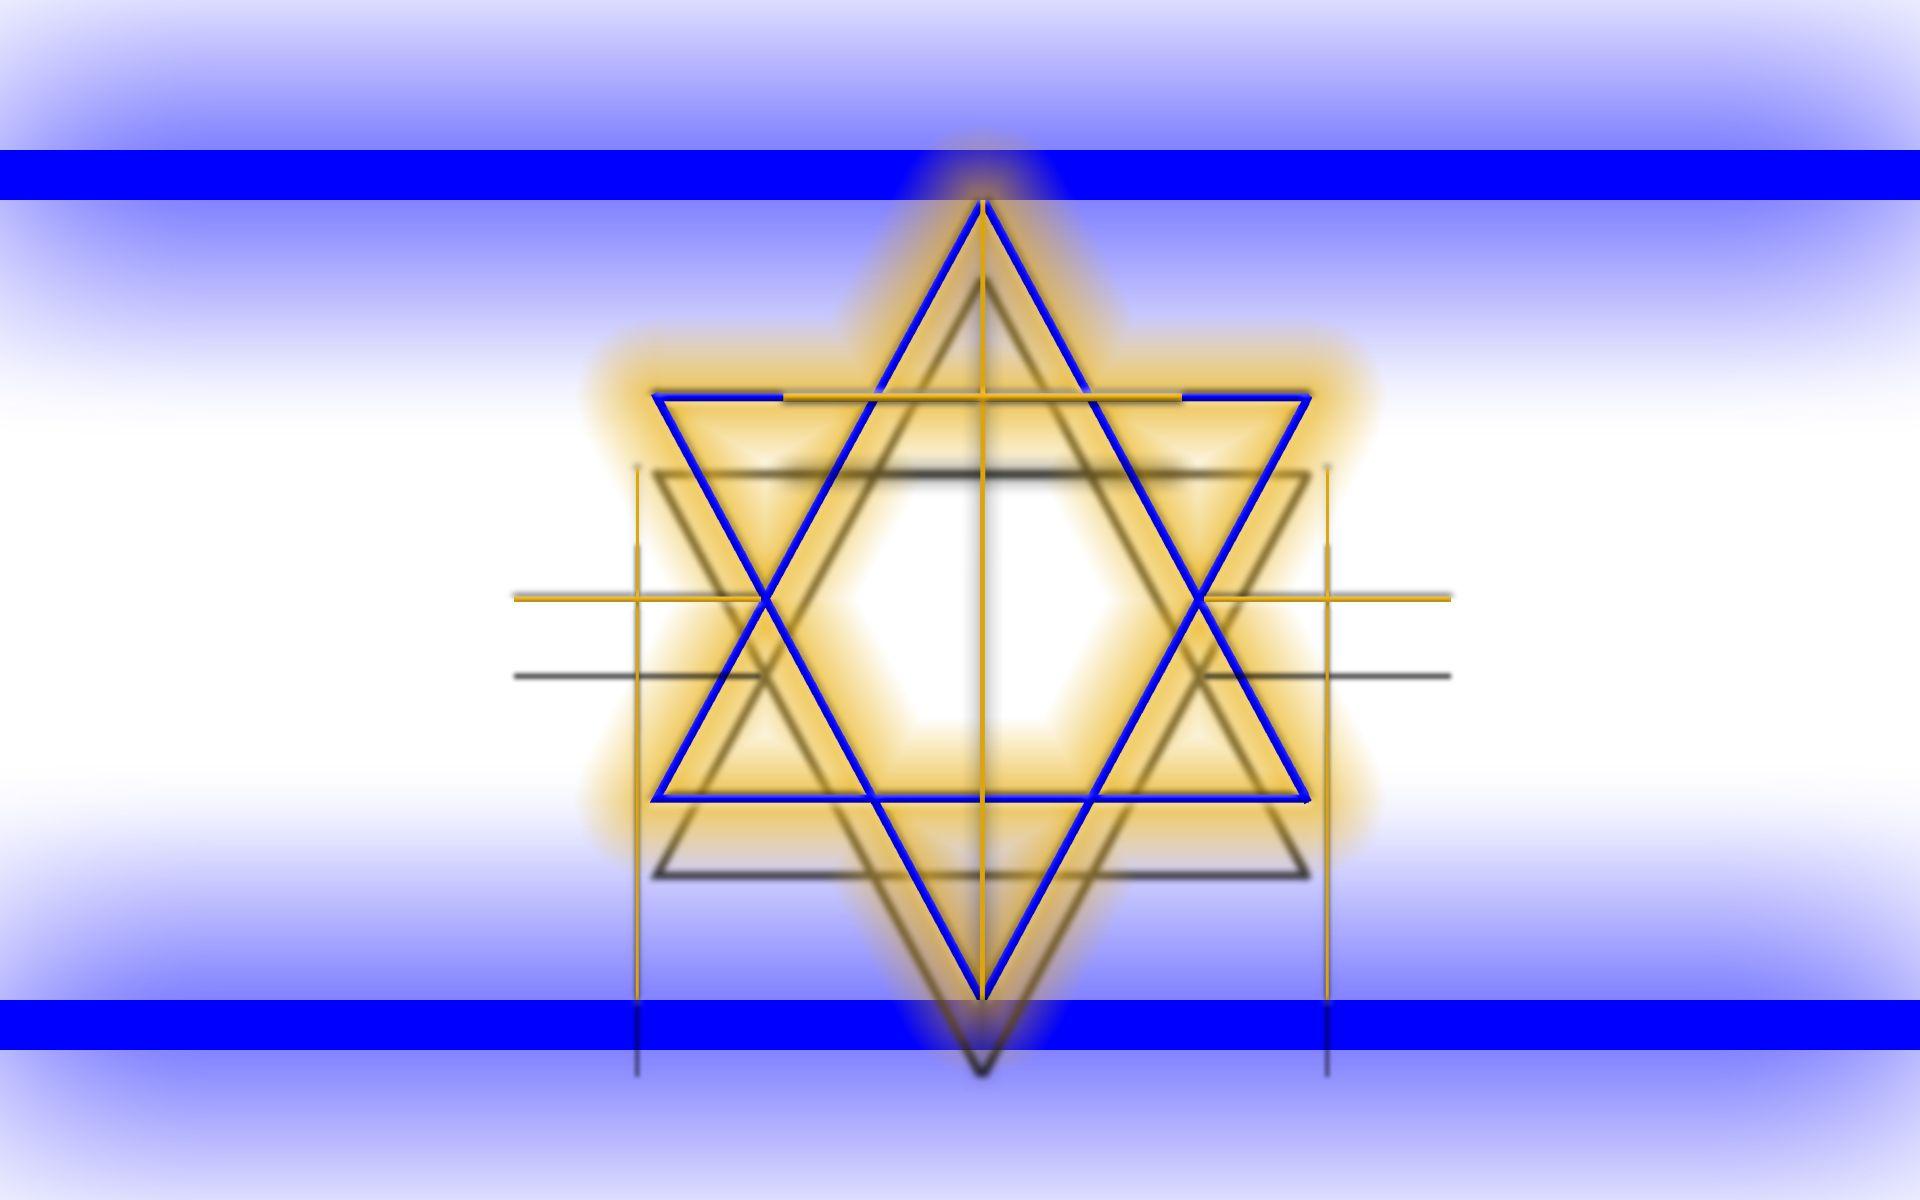 Israel Flag wallpaper